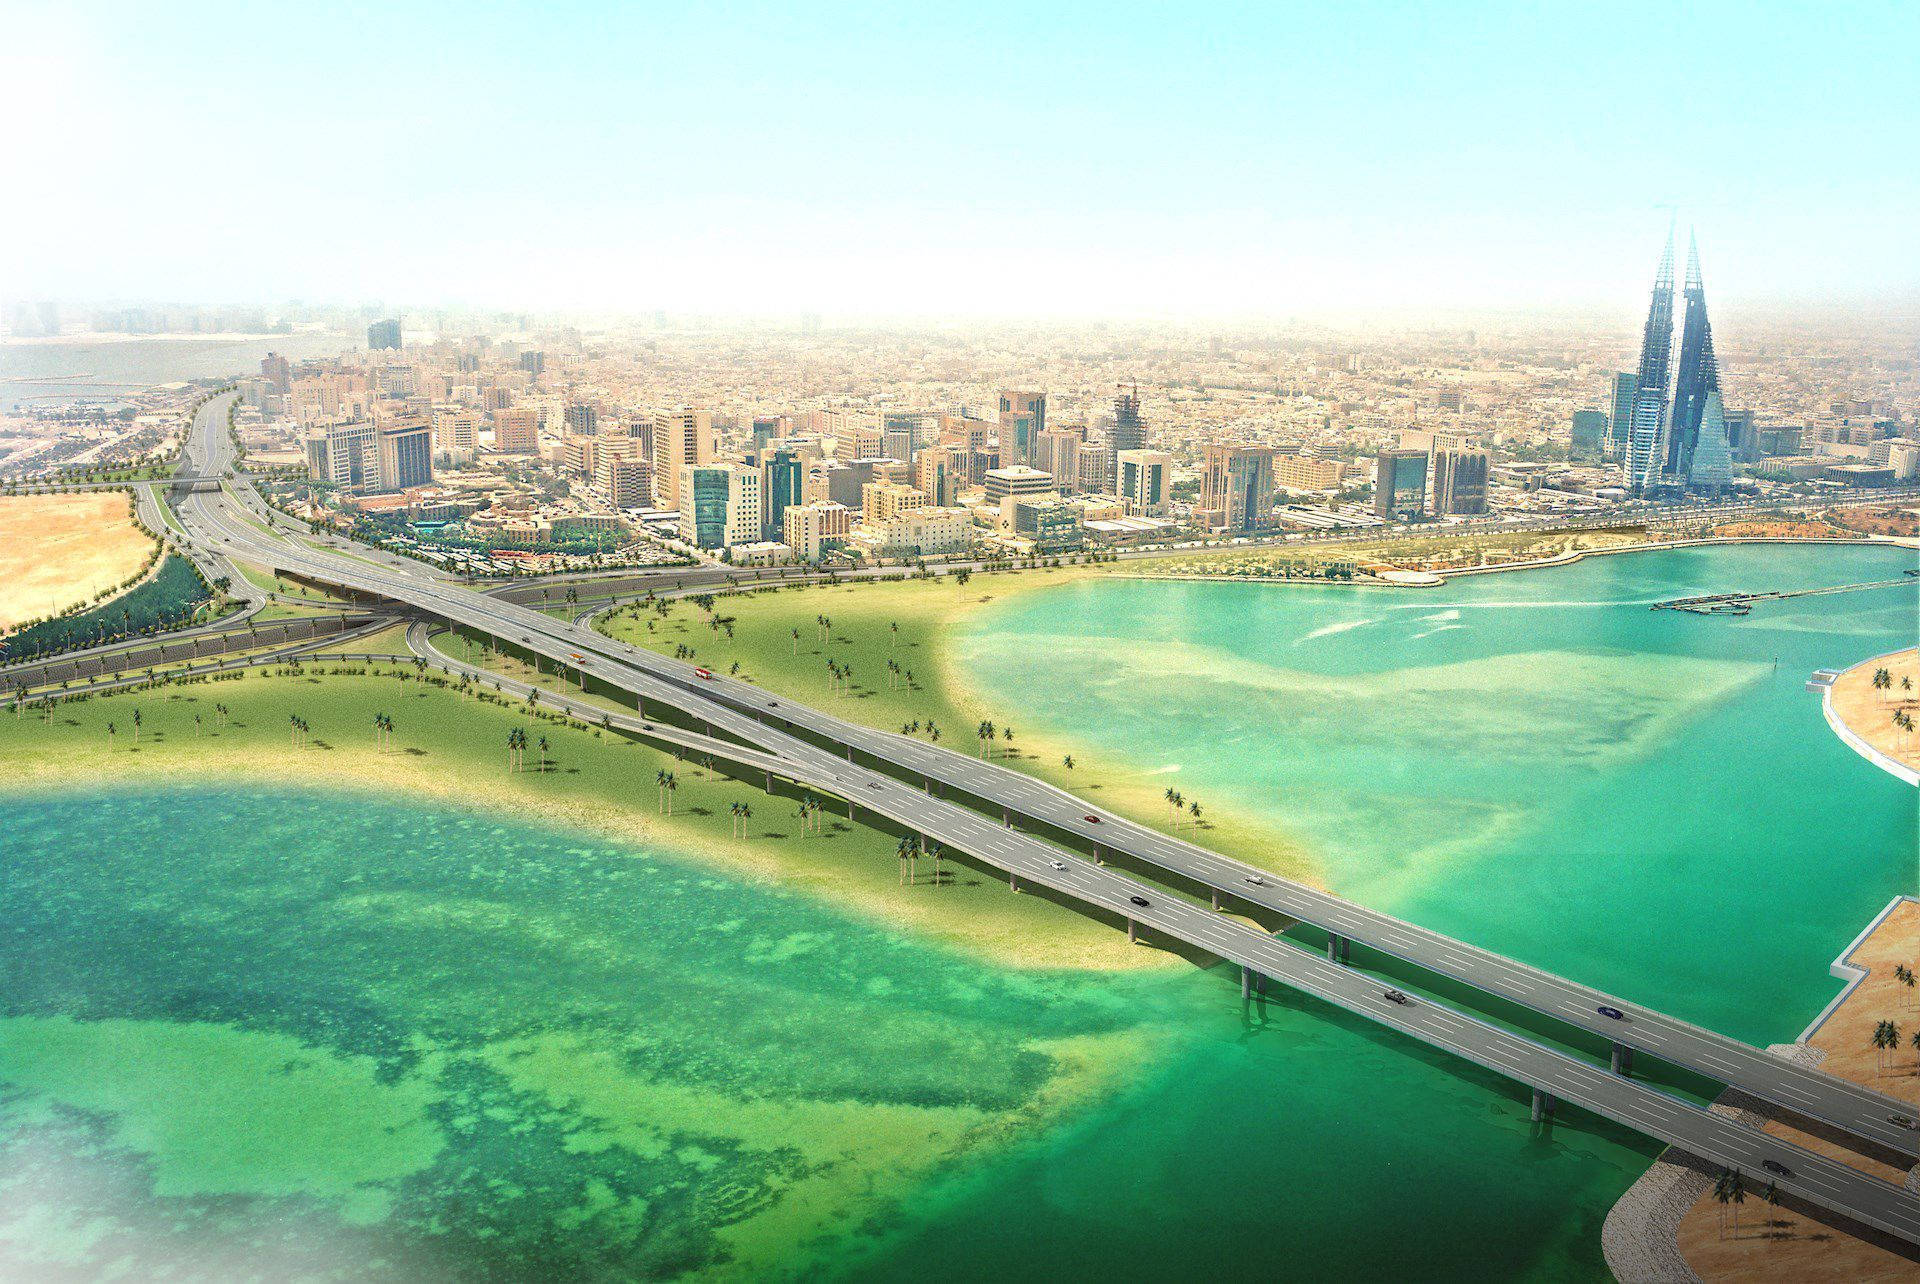 BahrainManama Causeway - Bahrain Manama Brücke. Wallpaper